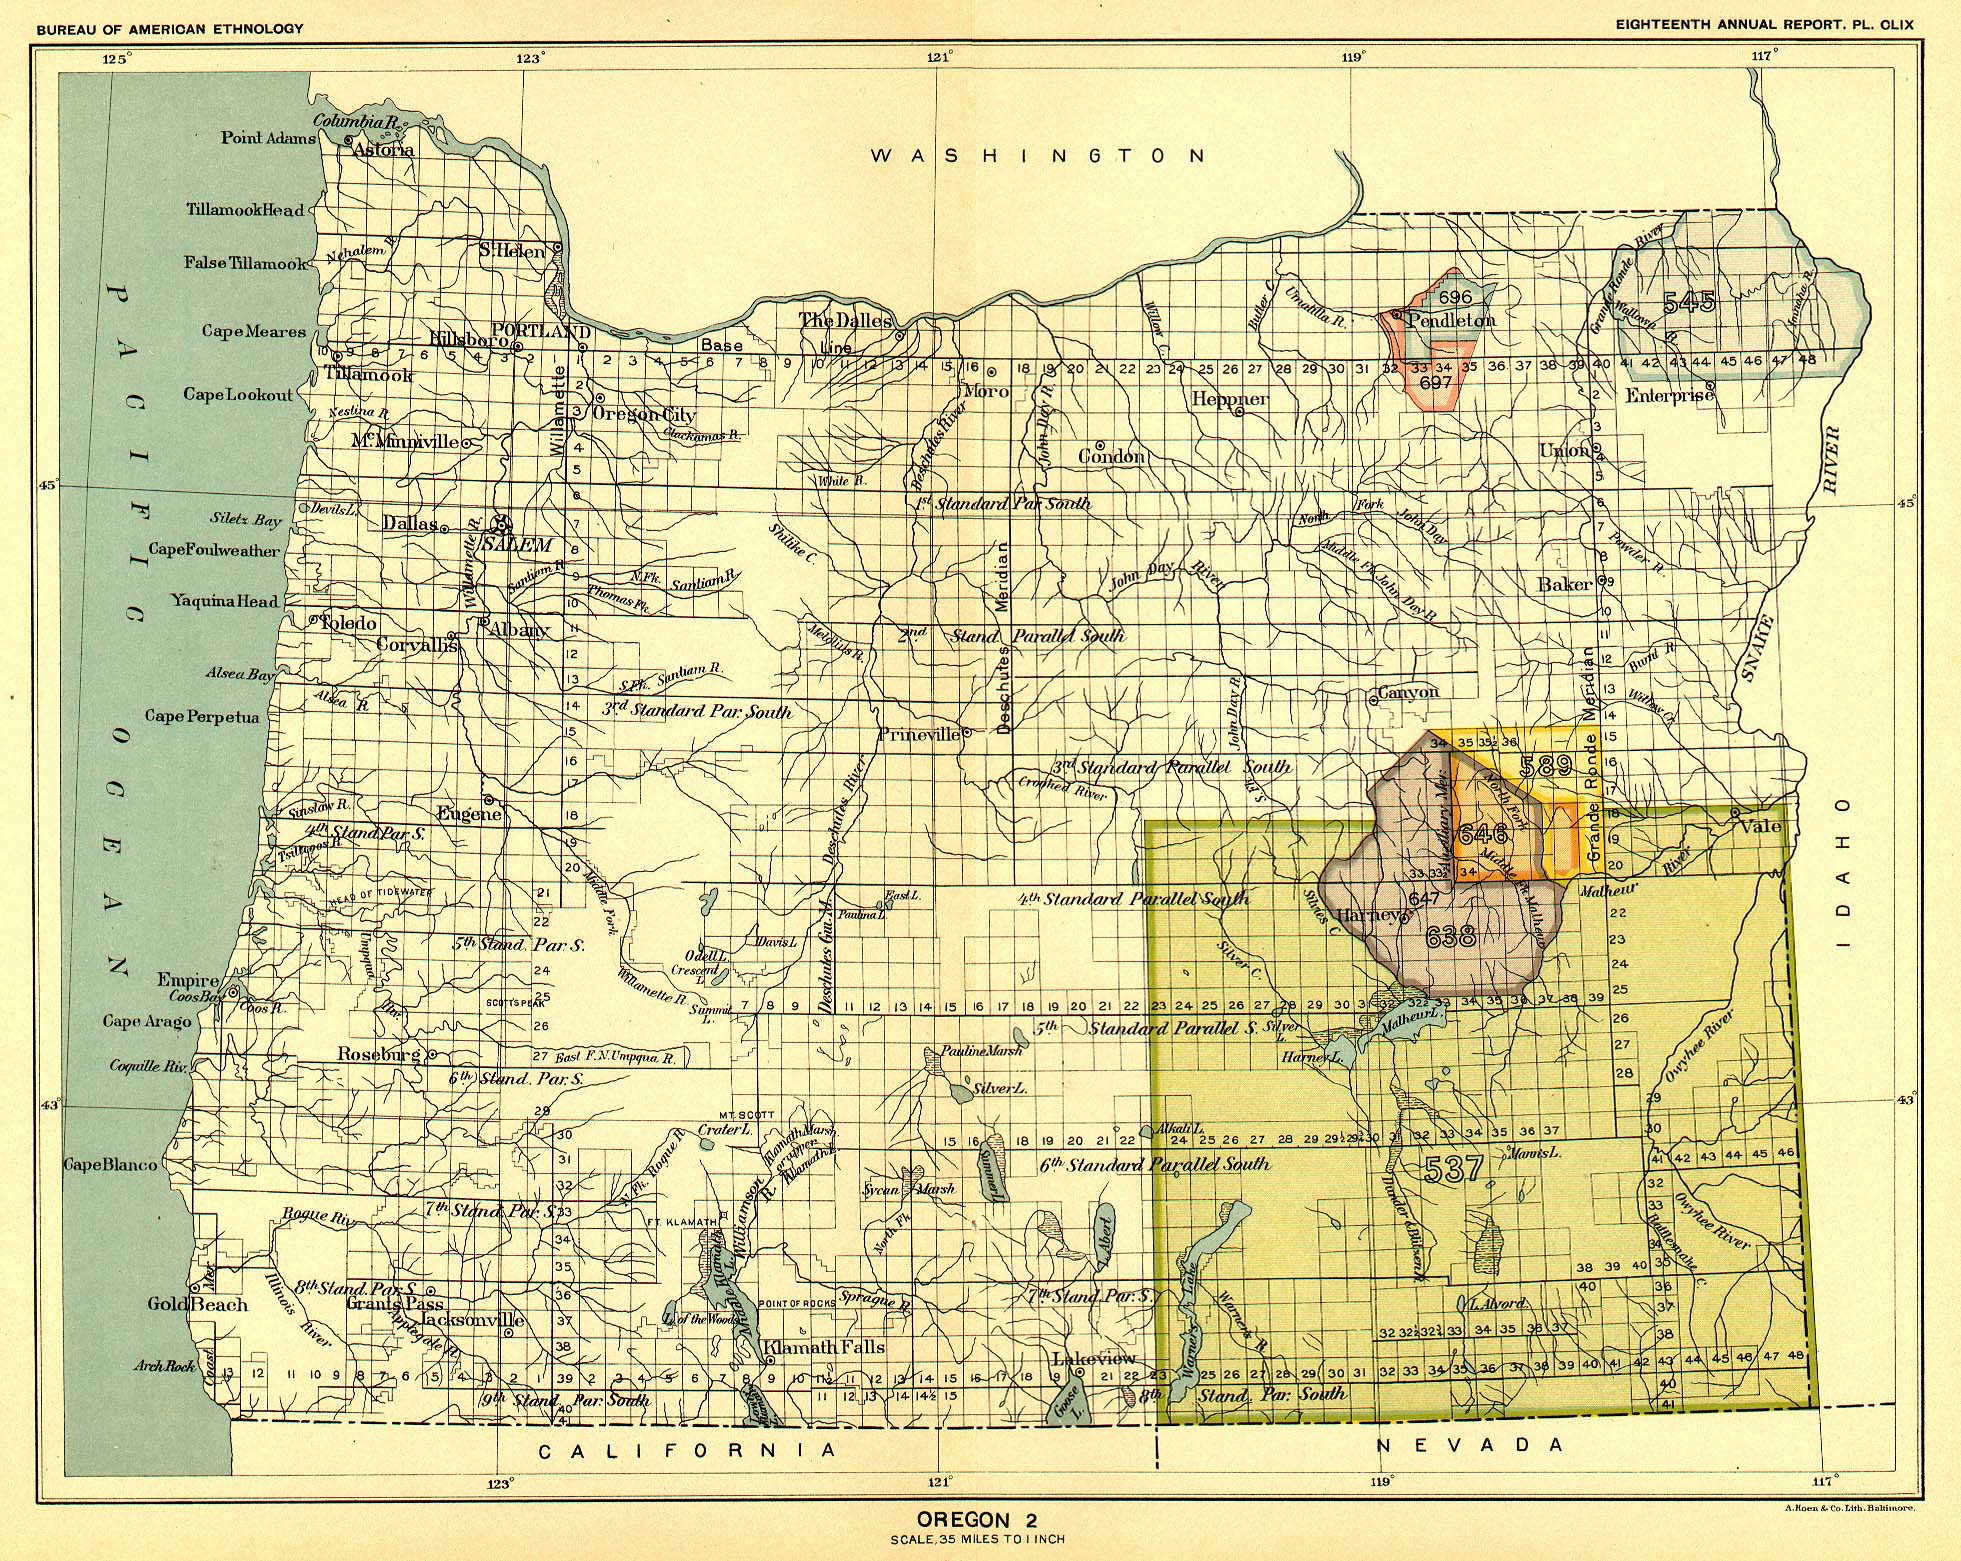 Oregon 2, Map 52